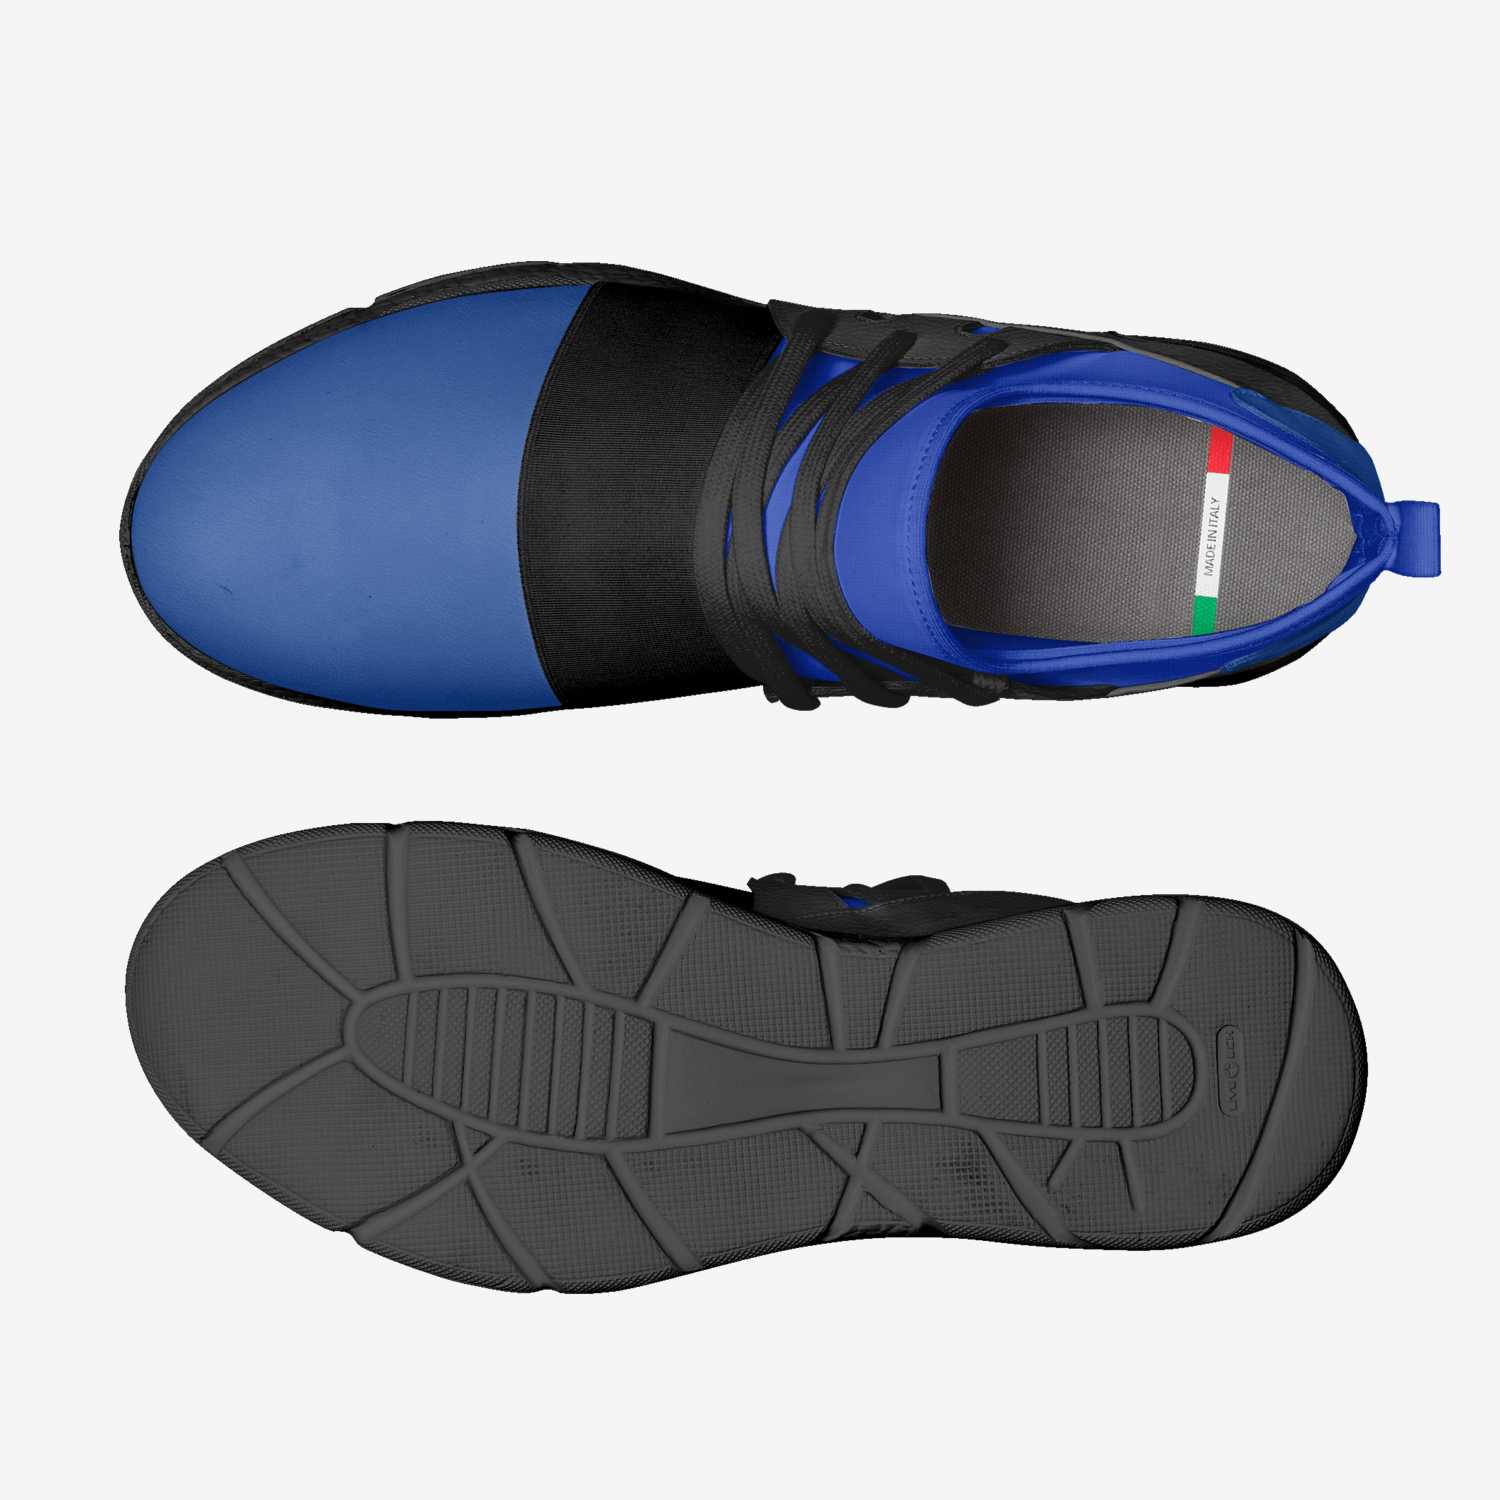 A Custom Shoe concept by Jordon